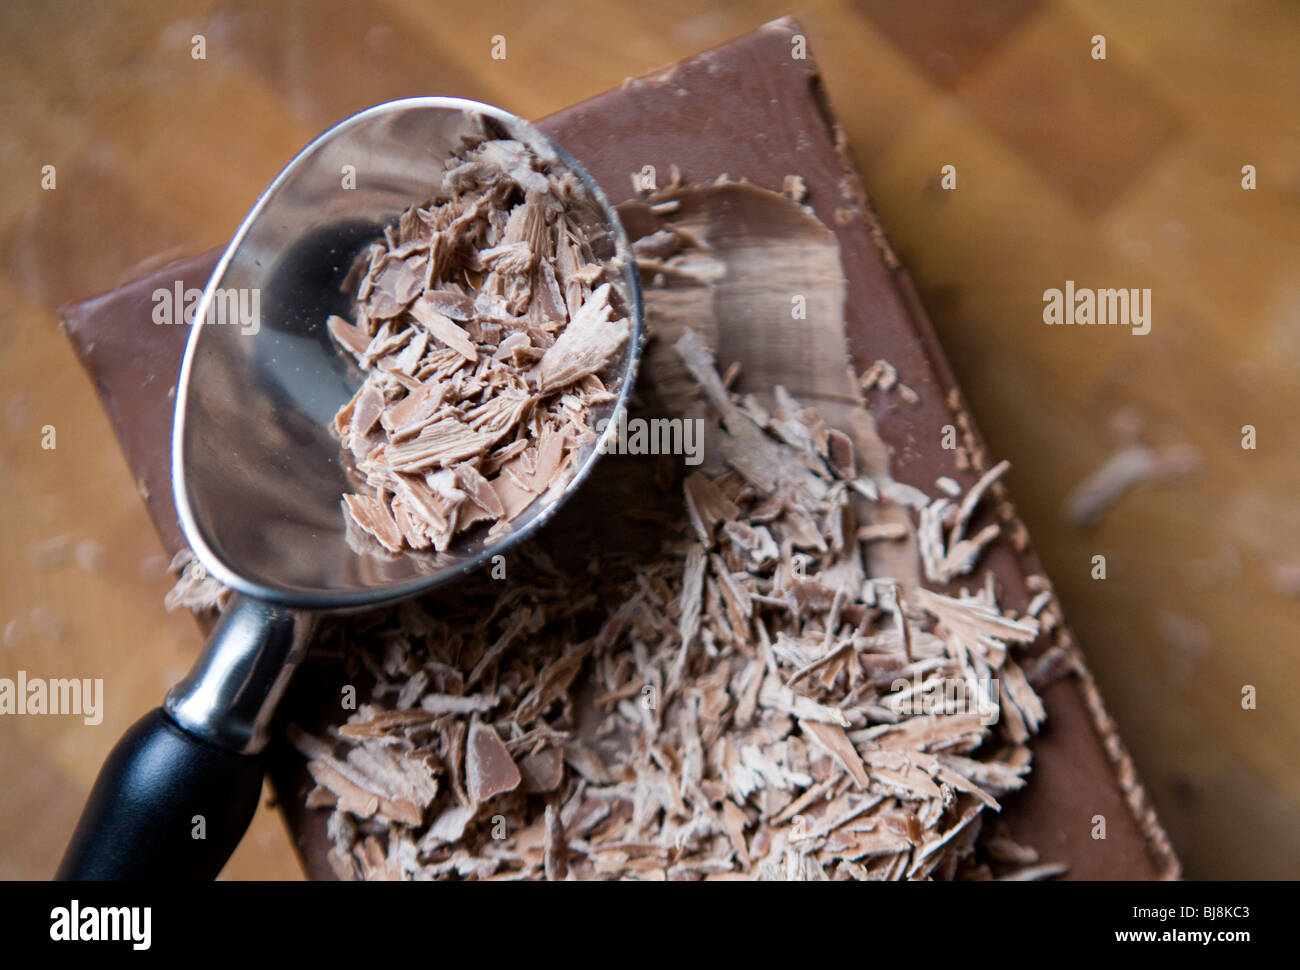 A block of milk chocolate and milk chocolate shavings.  Stock Photo